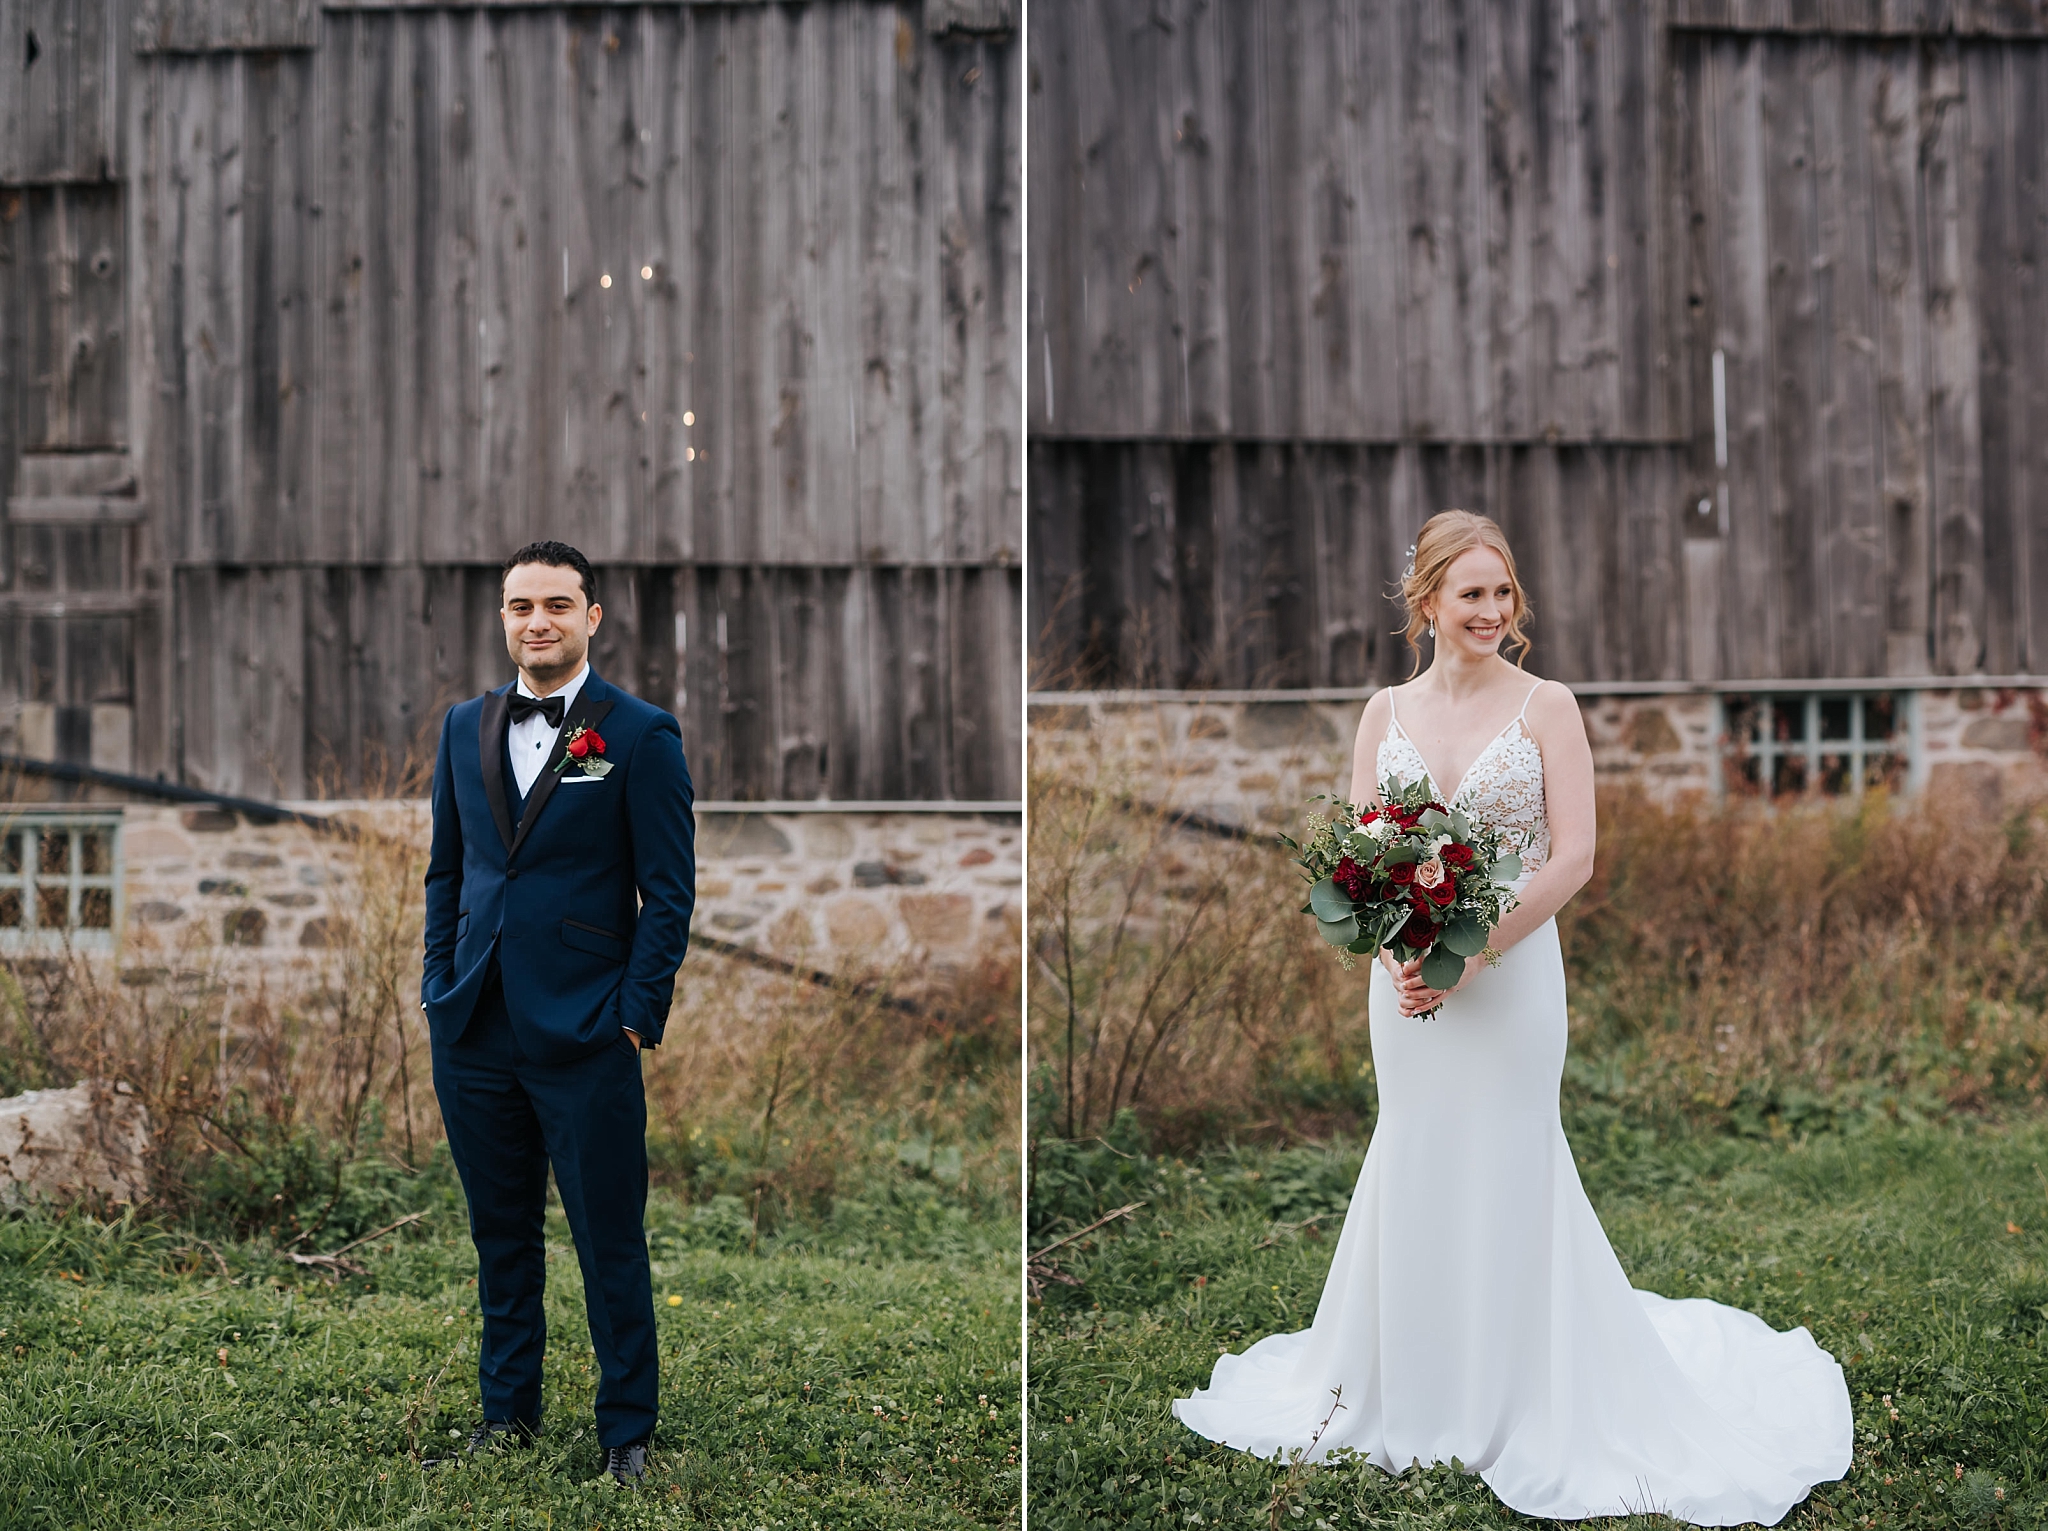 Waterstone Estate & Farms Wedding - bride and groom portrait